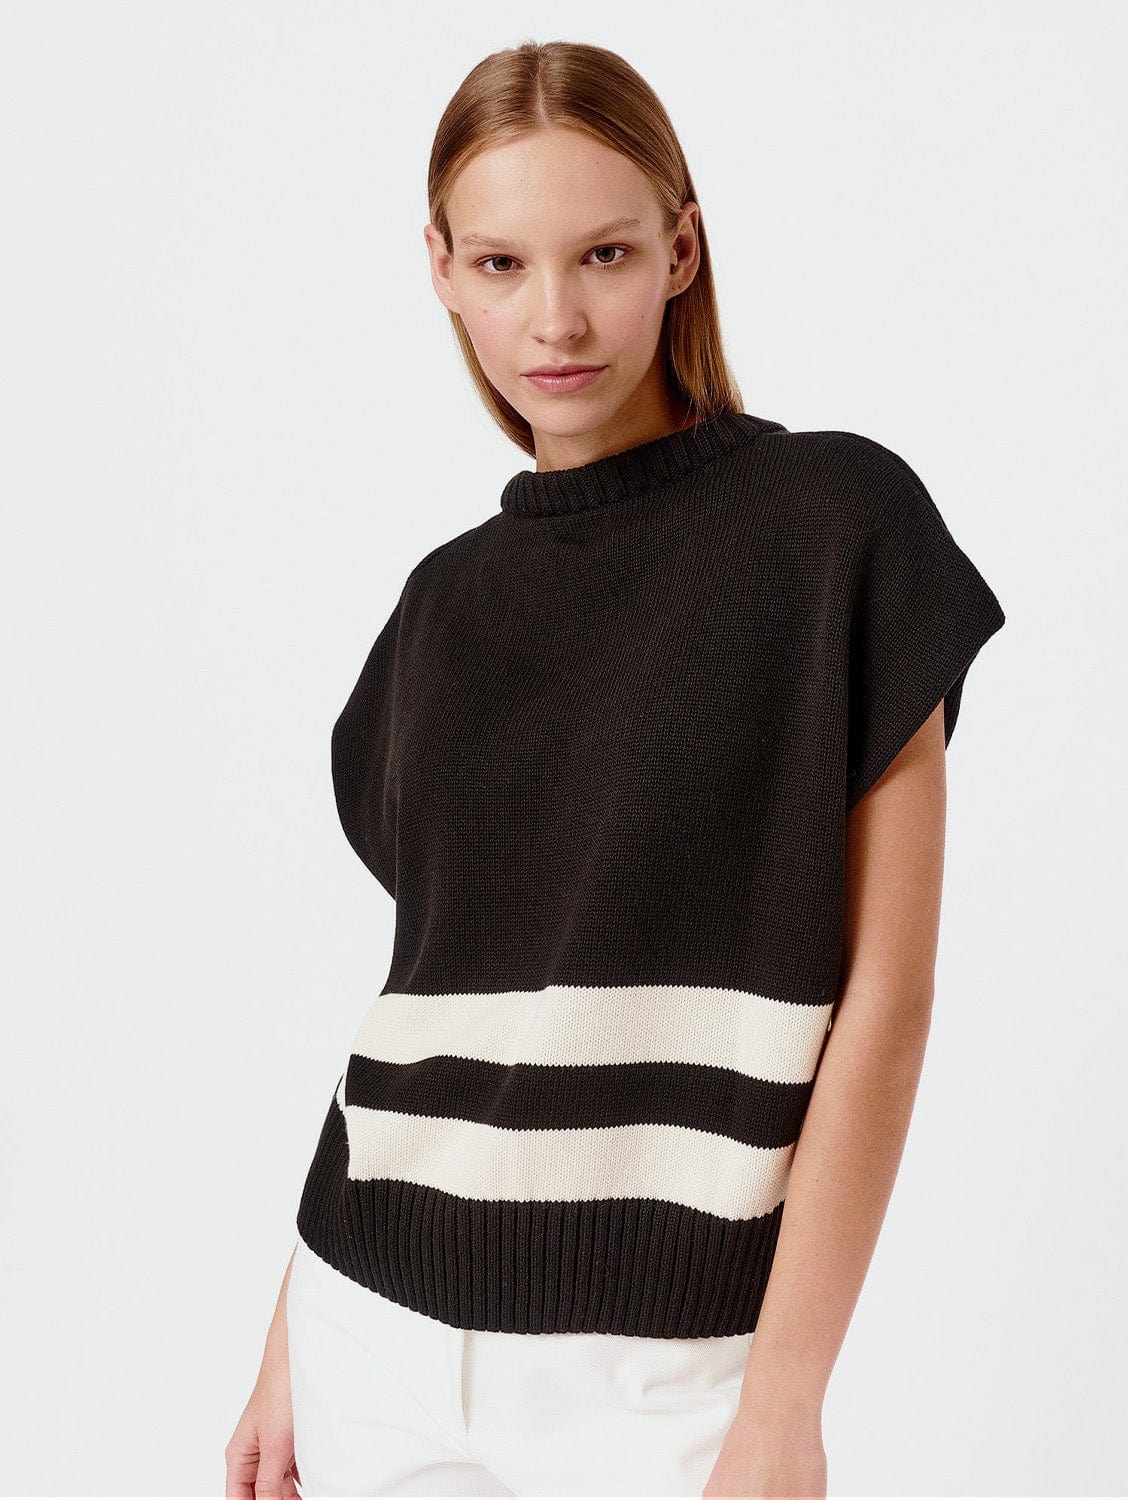 Mila.Vert Knitted striped sleeveless top XS-M / Black-cream